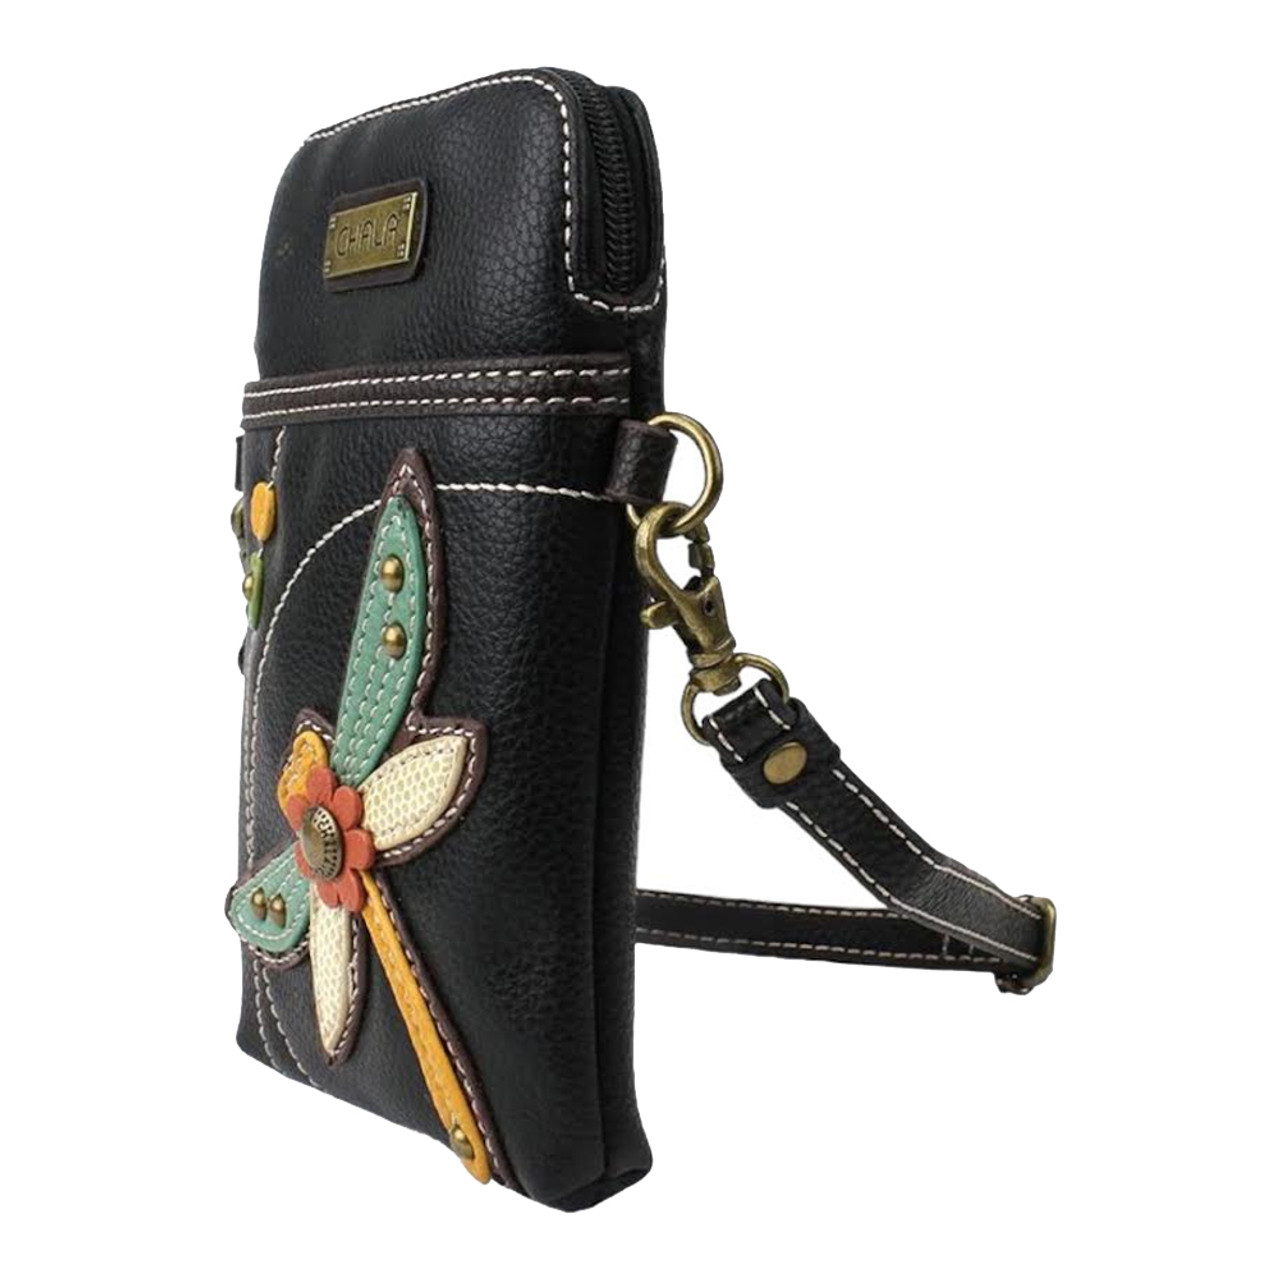 Chala Dragonfly Cellphone Crossbody Handbag